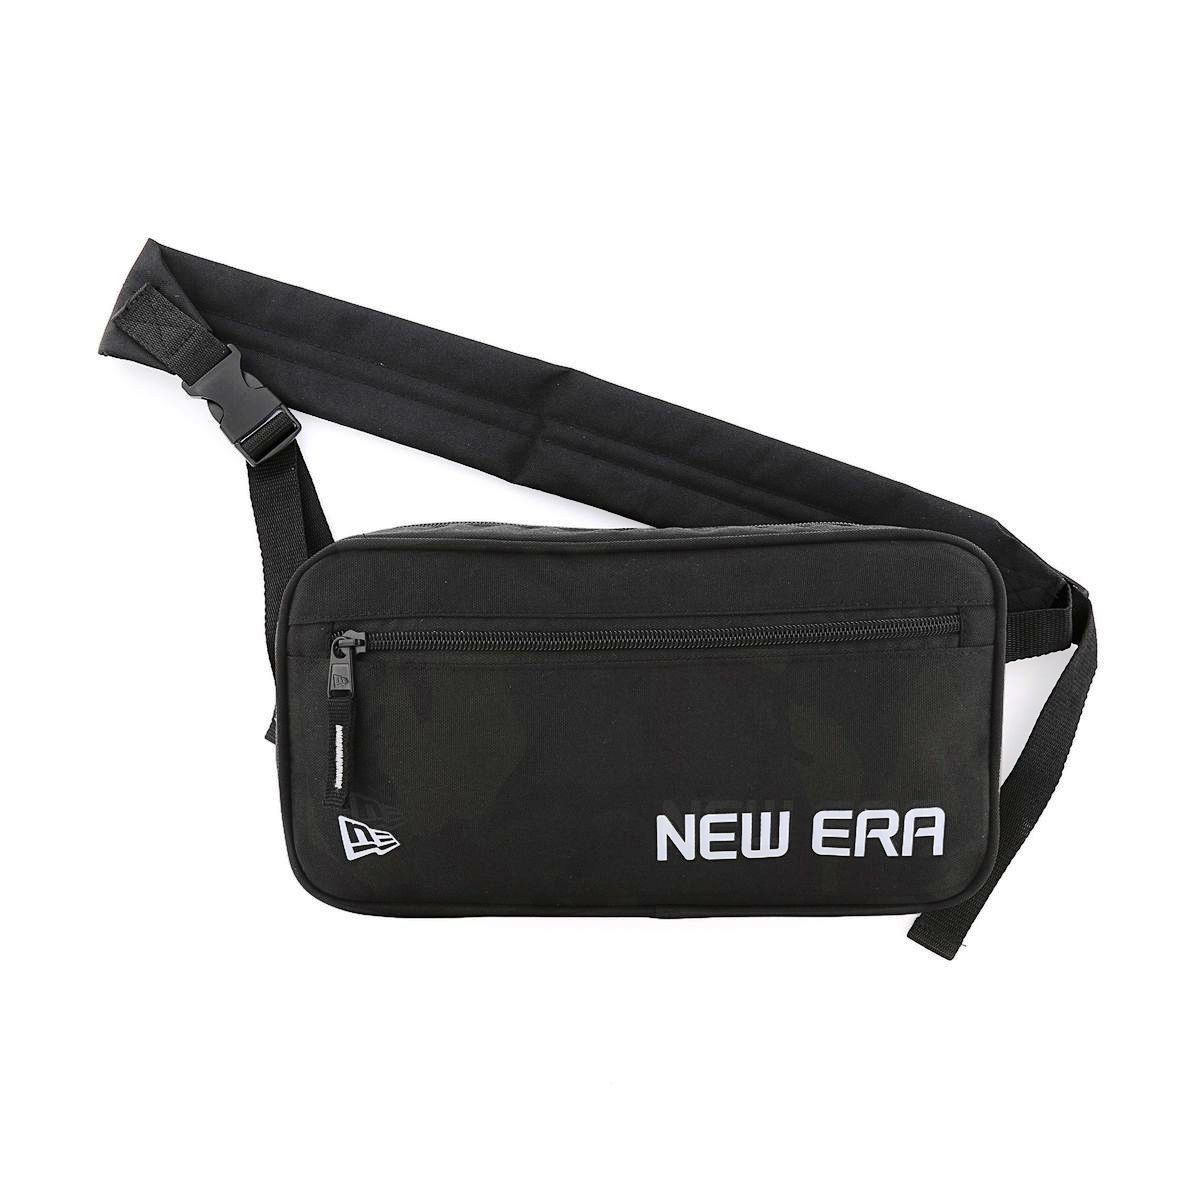 New Era Cross Men's Body Bag Black